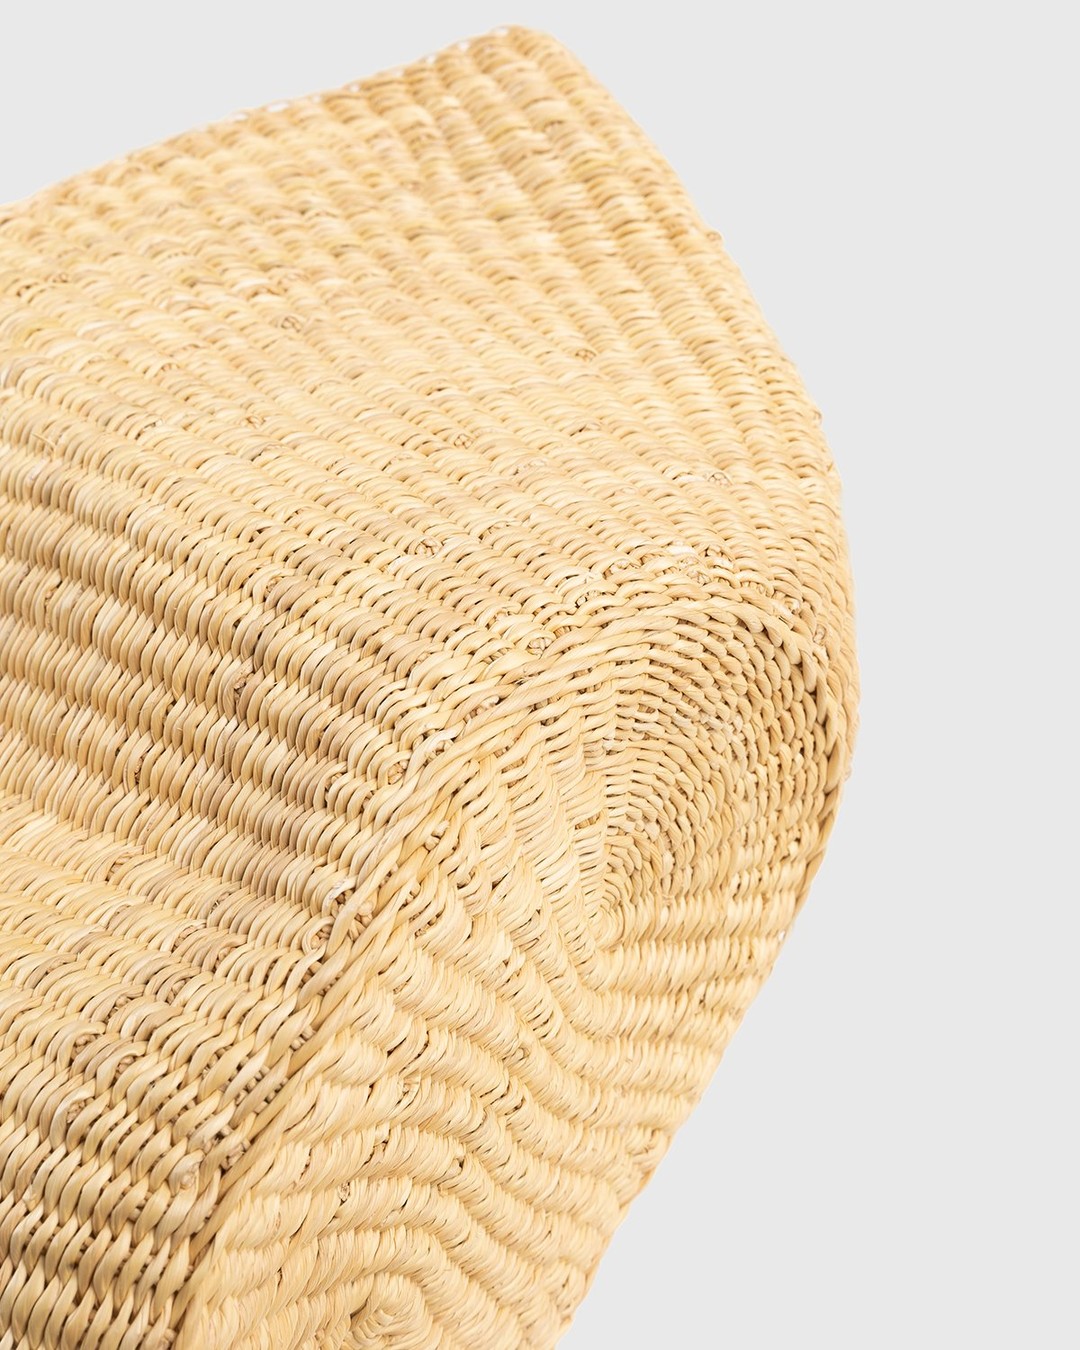 Loewe – Paula's Ibiza Small Shell Basket Bag Natural/Pecan - Shoulder Bags - Beige - Image 5